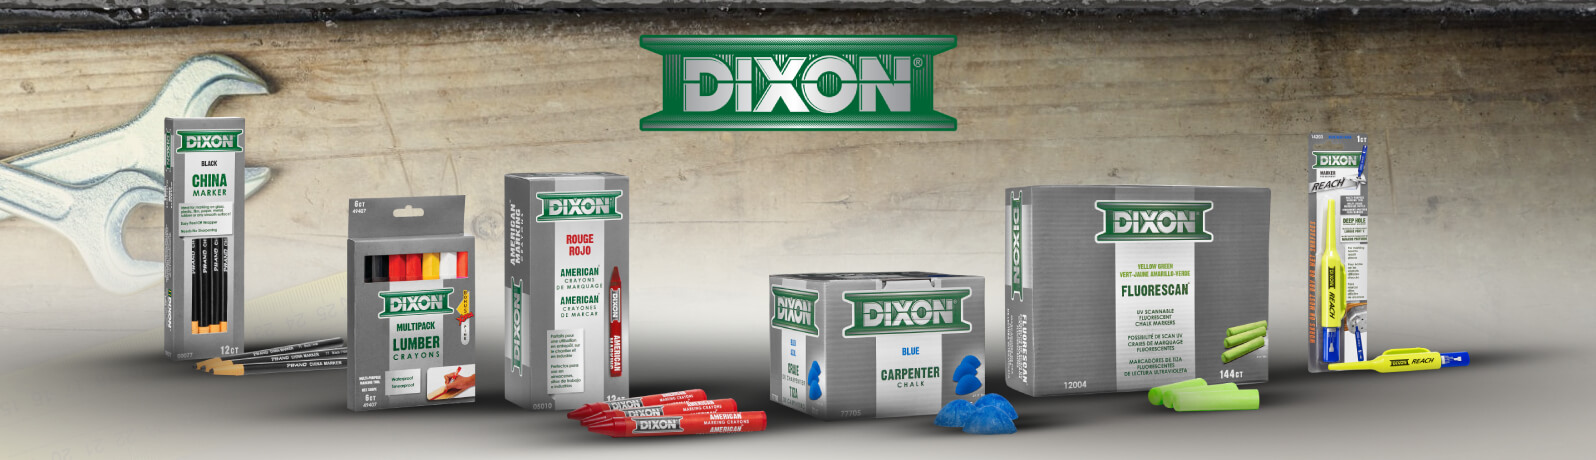 Dixon Industrial